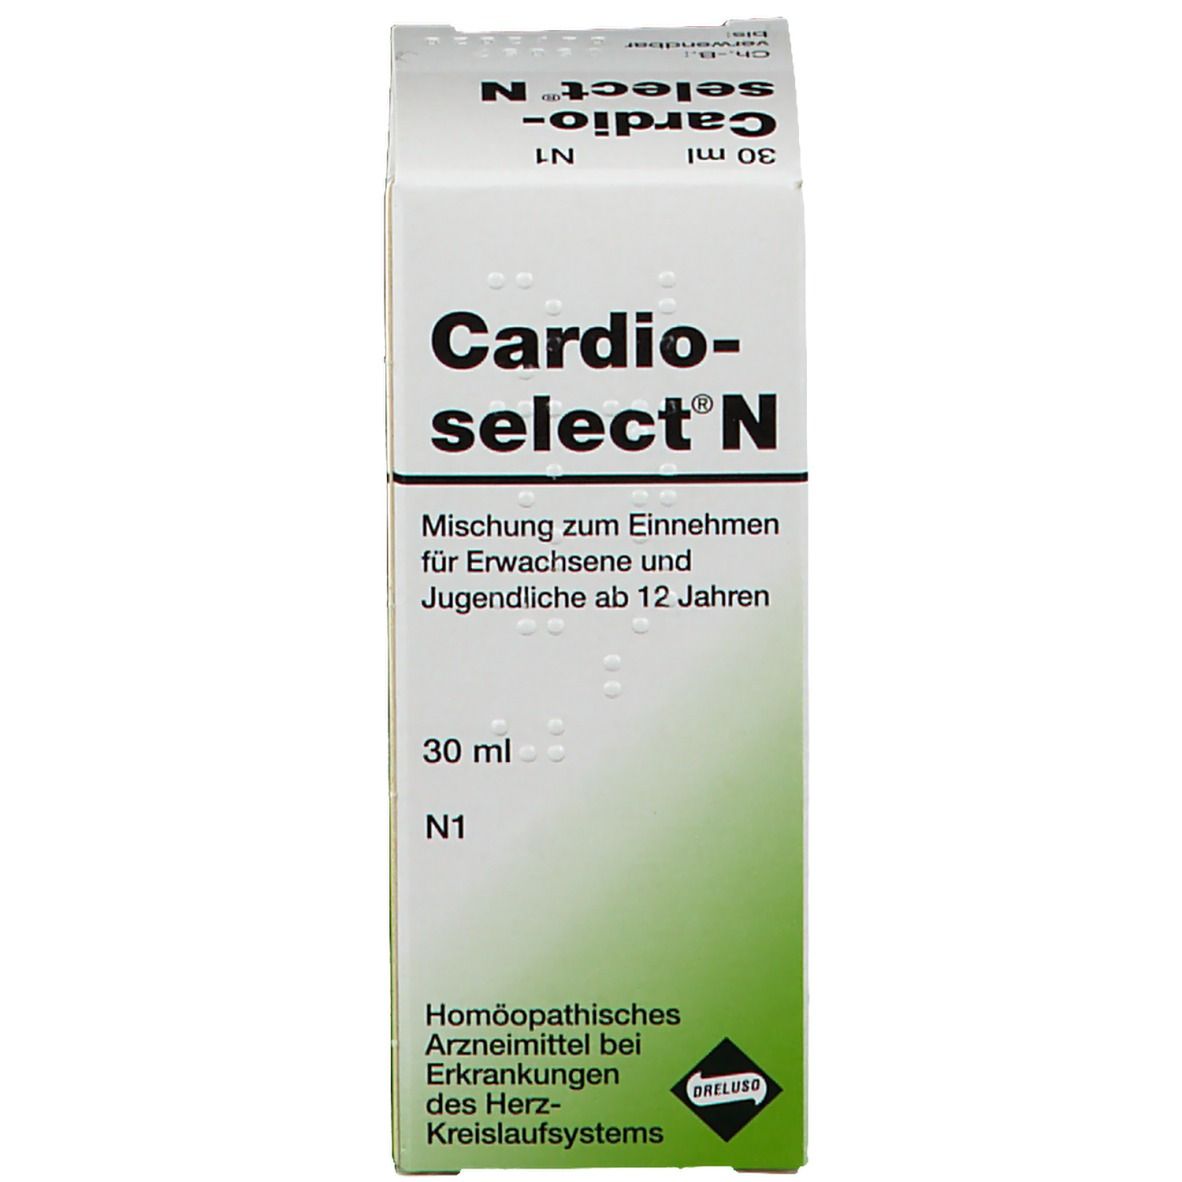 Cardio-select N